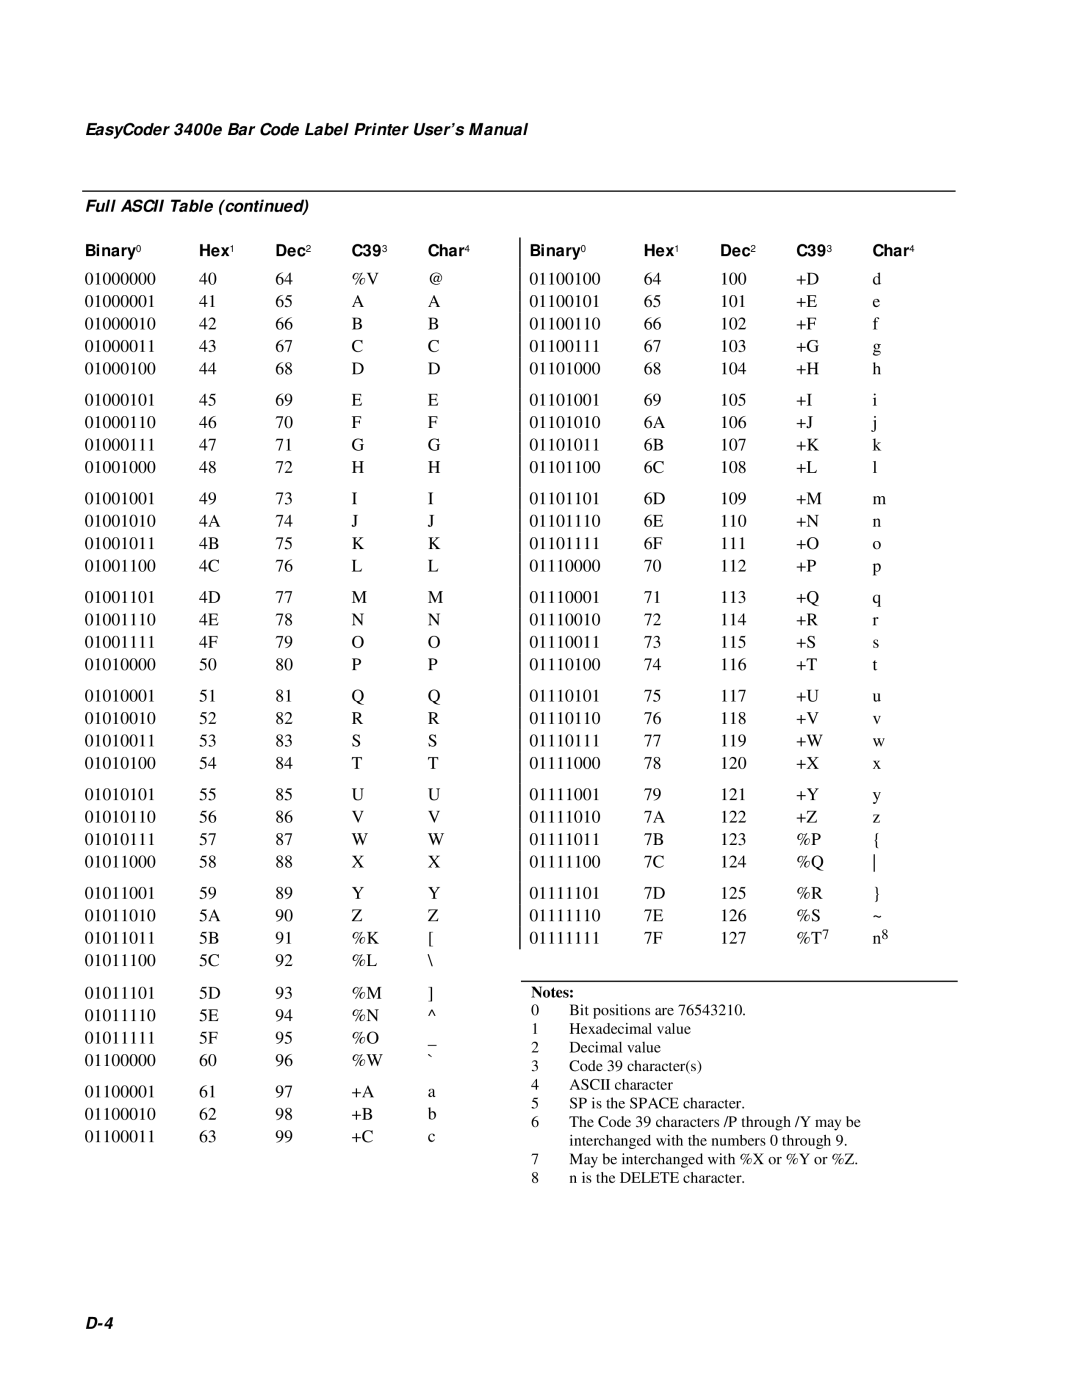 IBM EasyCoder 3400e Bar Code Label Printer User’s Manual, Full ASCII Table continued, Binary0, Hex1, Dec2, C393 